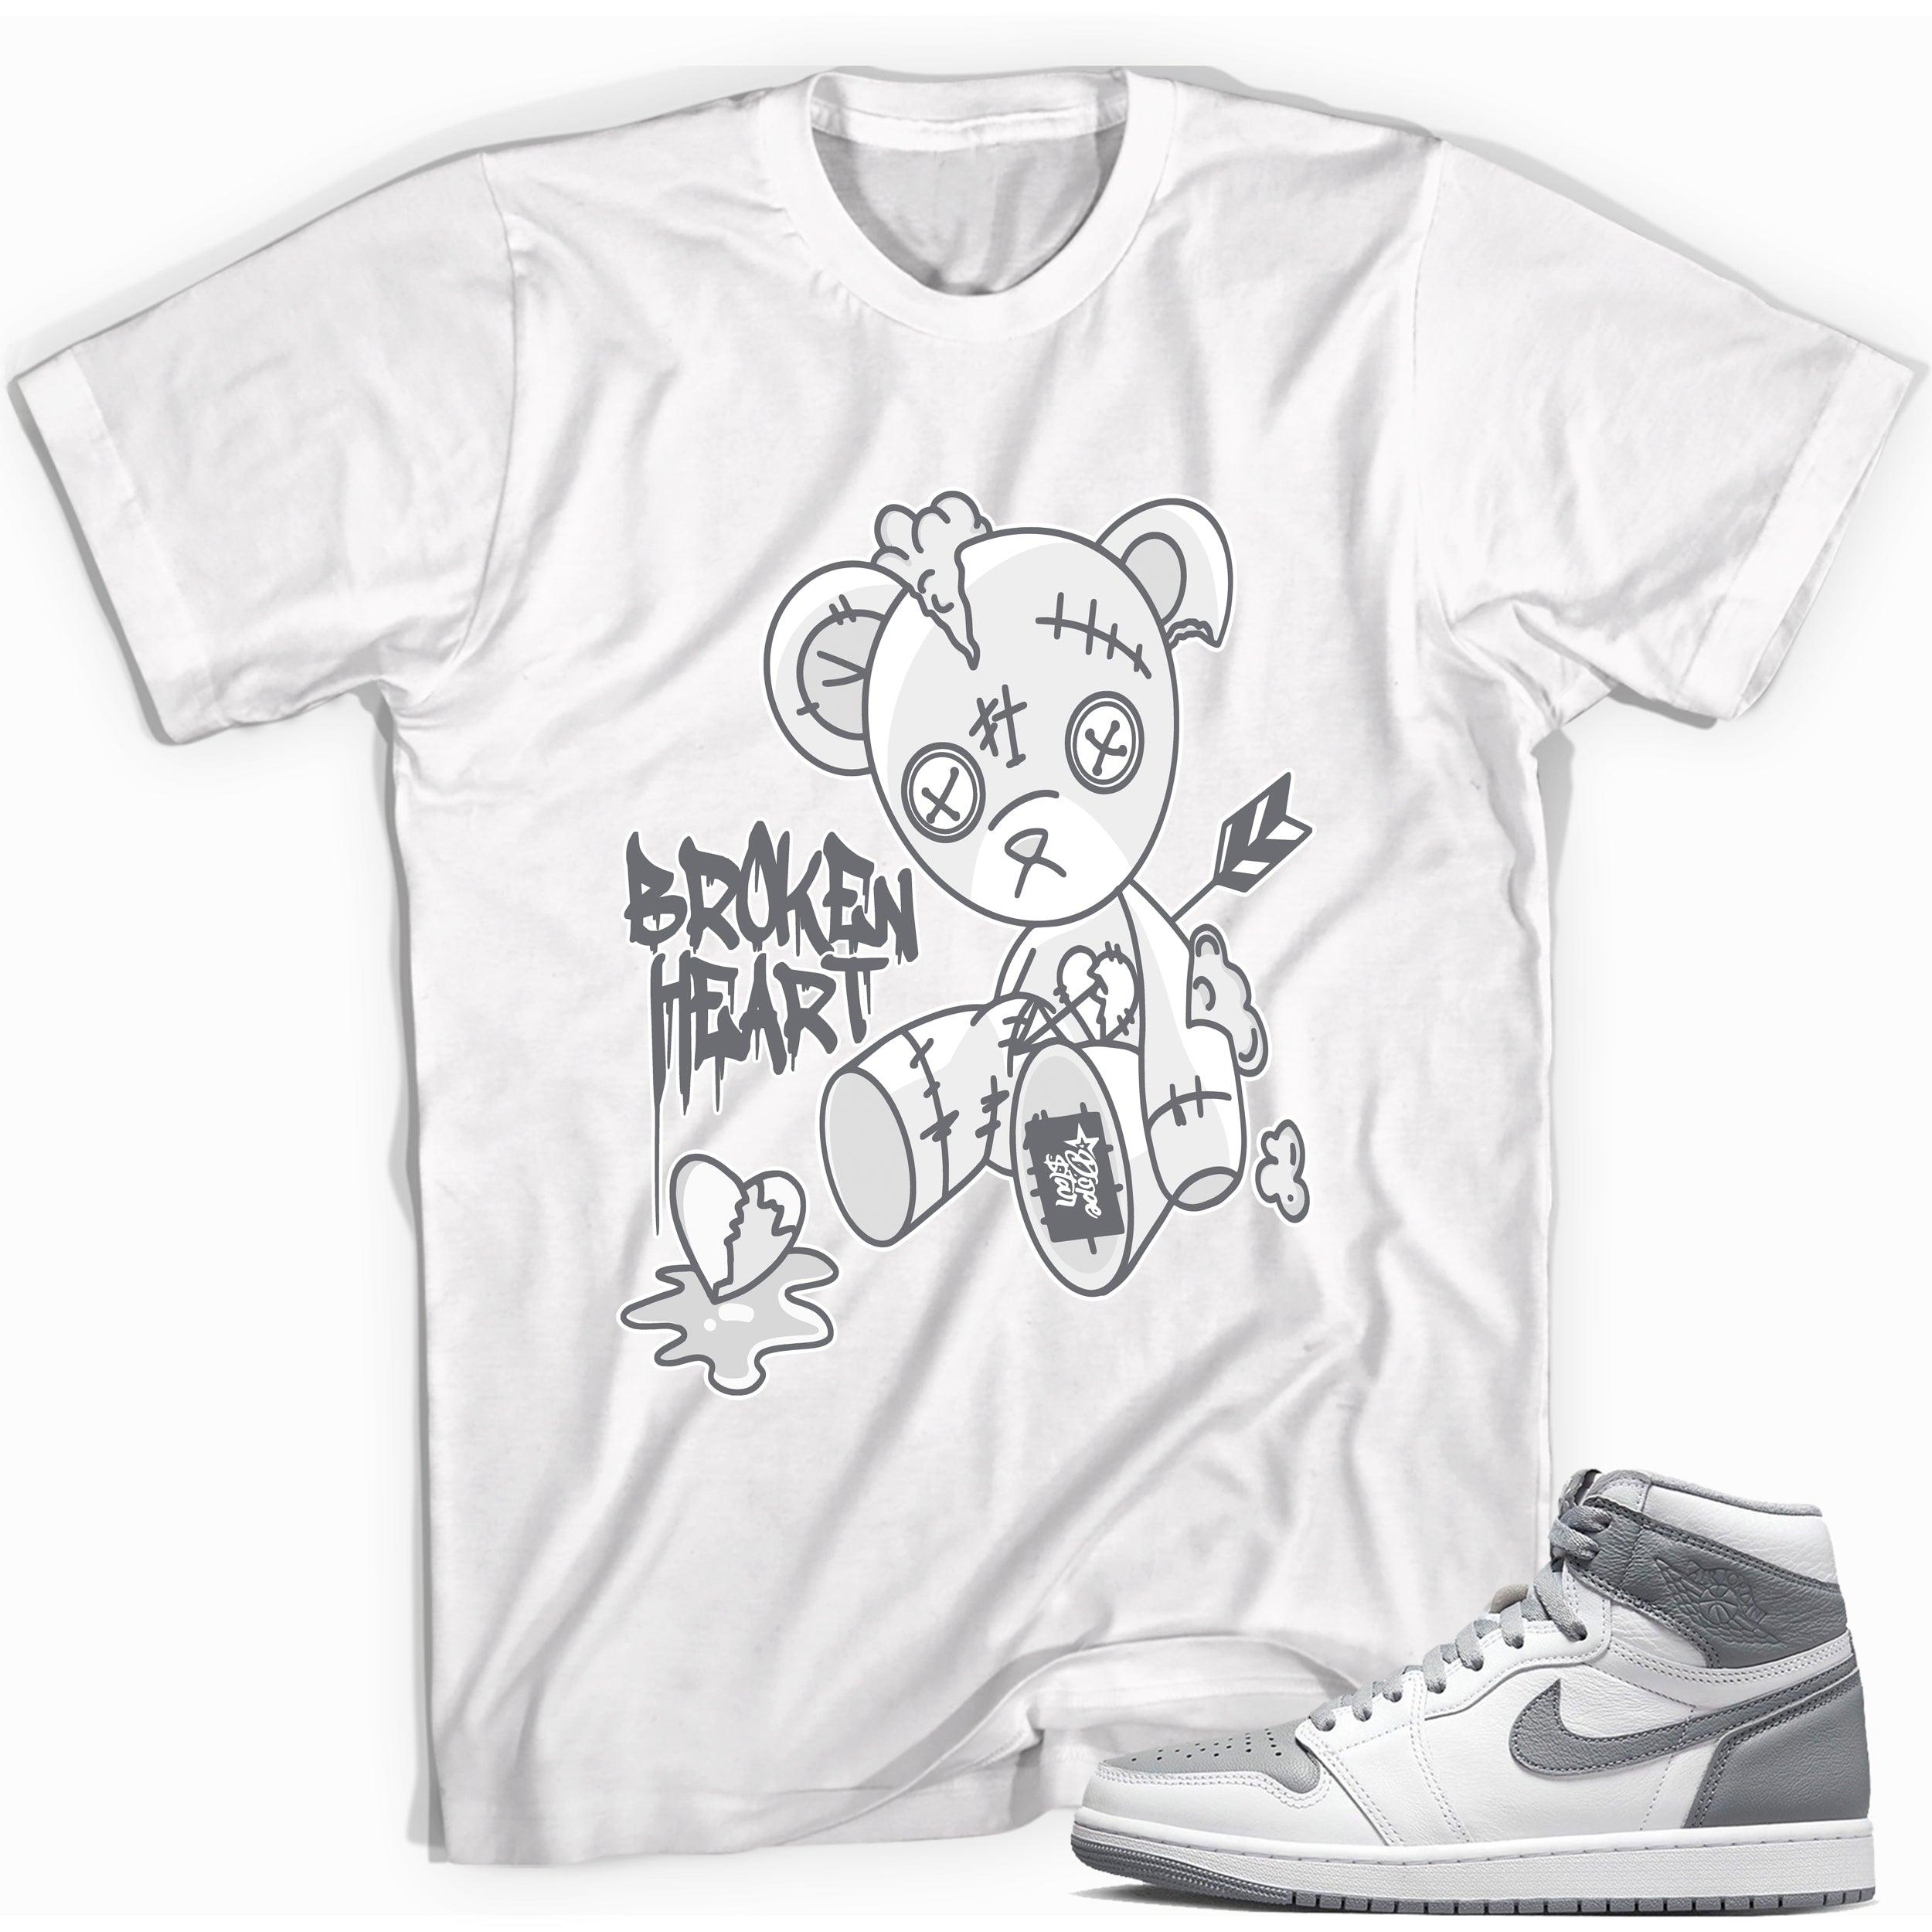 Jordan 1s High OG Stealth Shirt - Broken Heart Bear - Sneaker Shirts Outlet